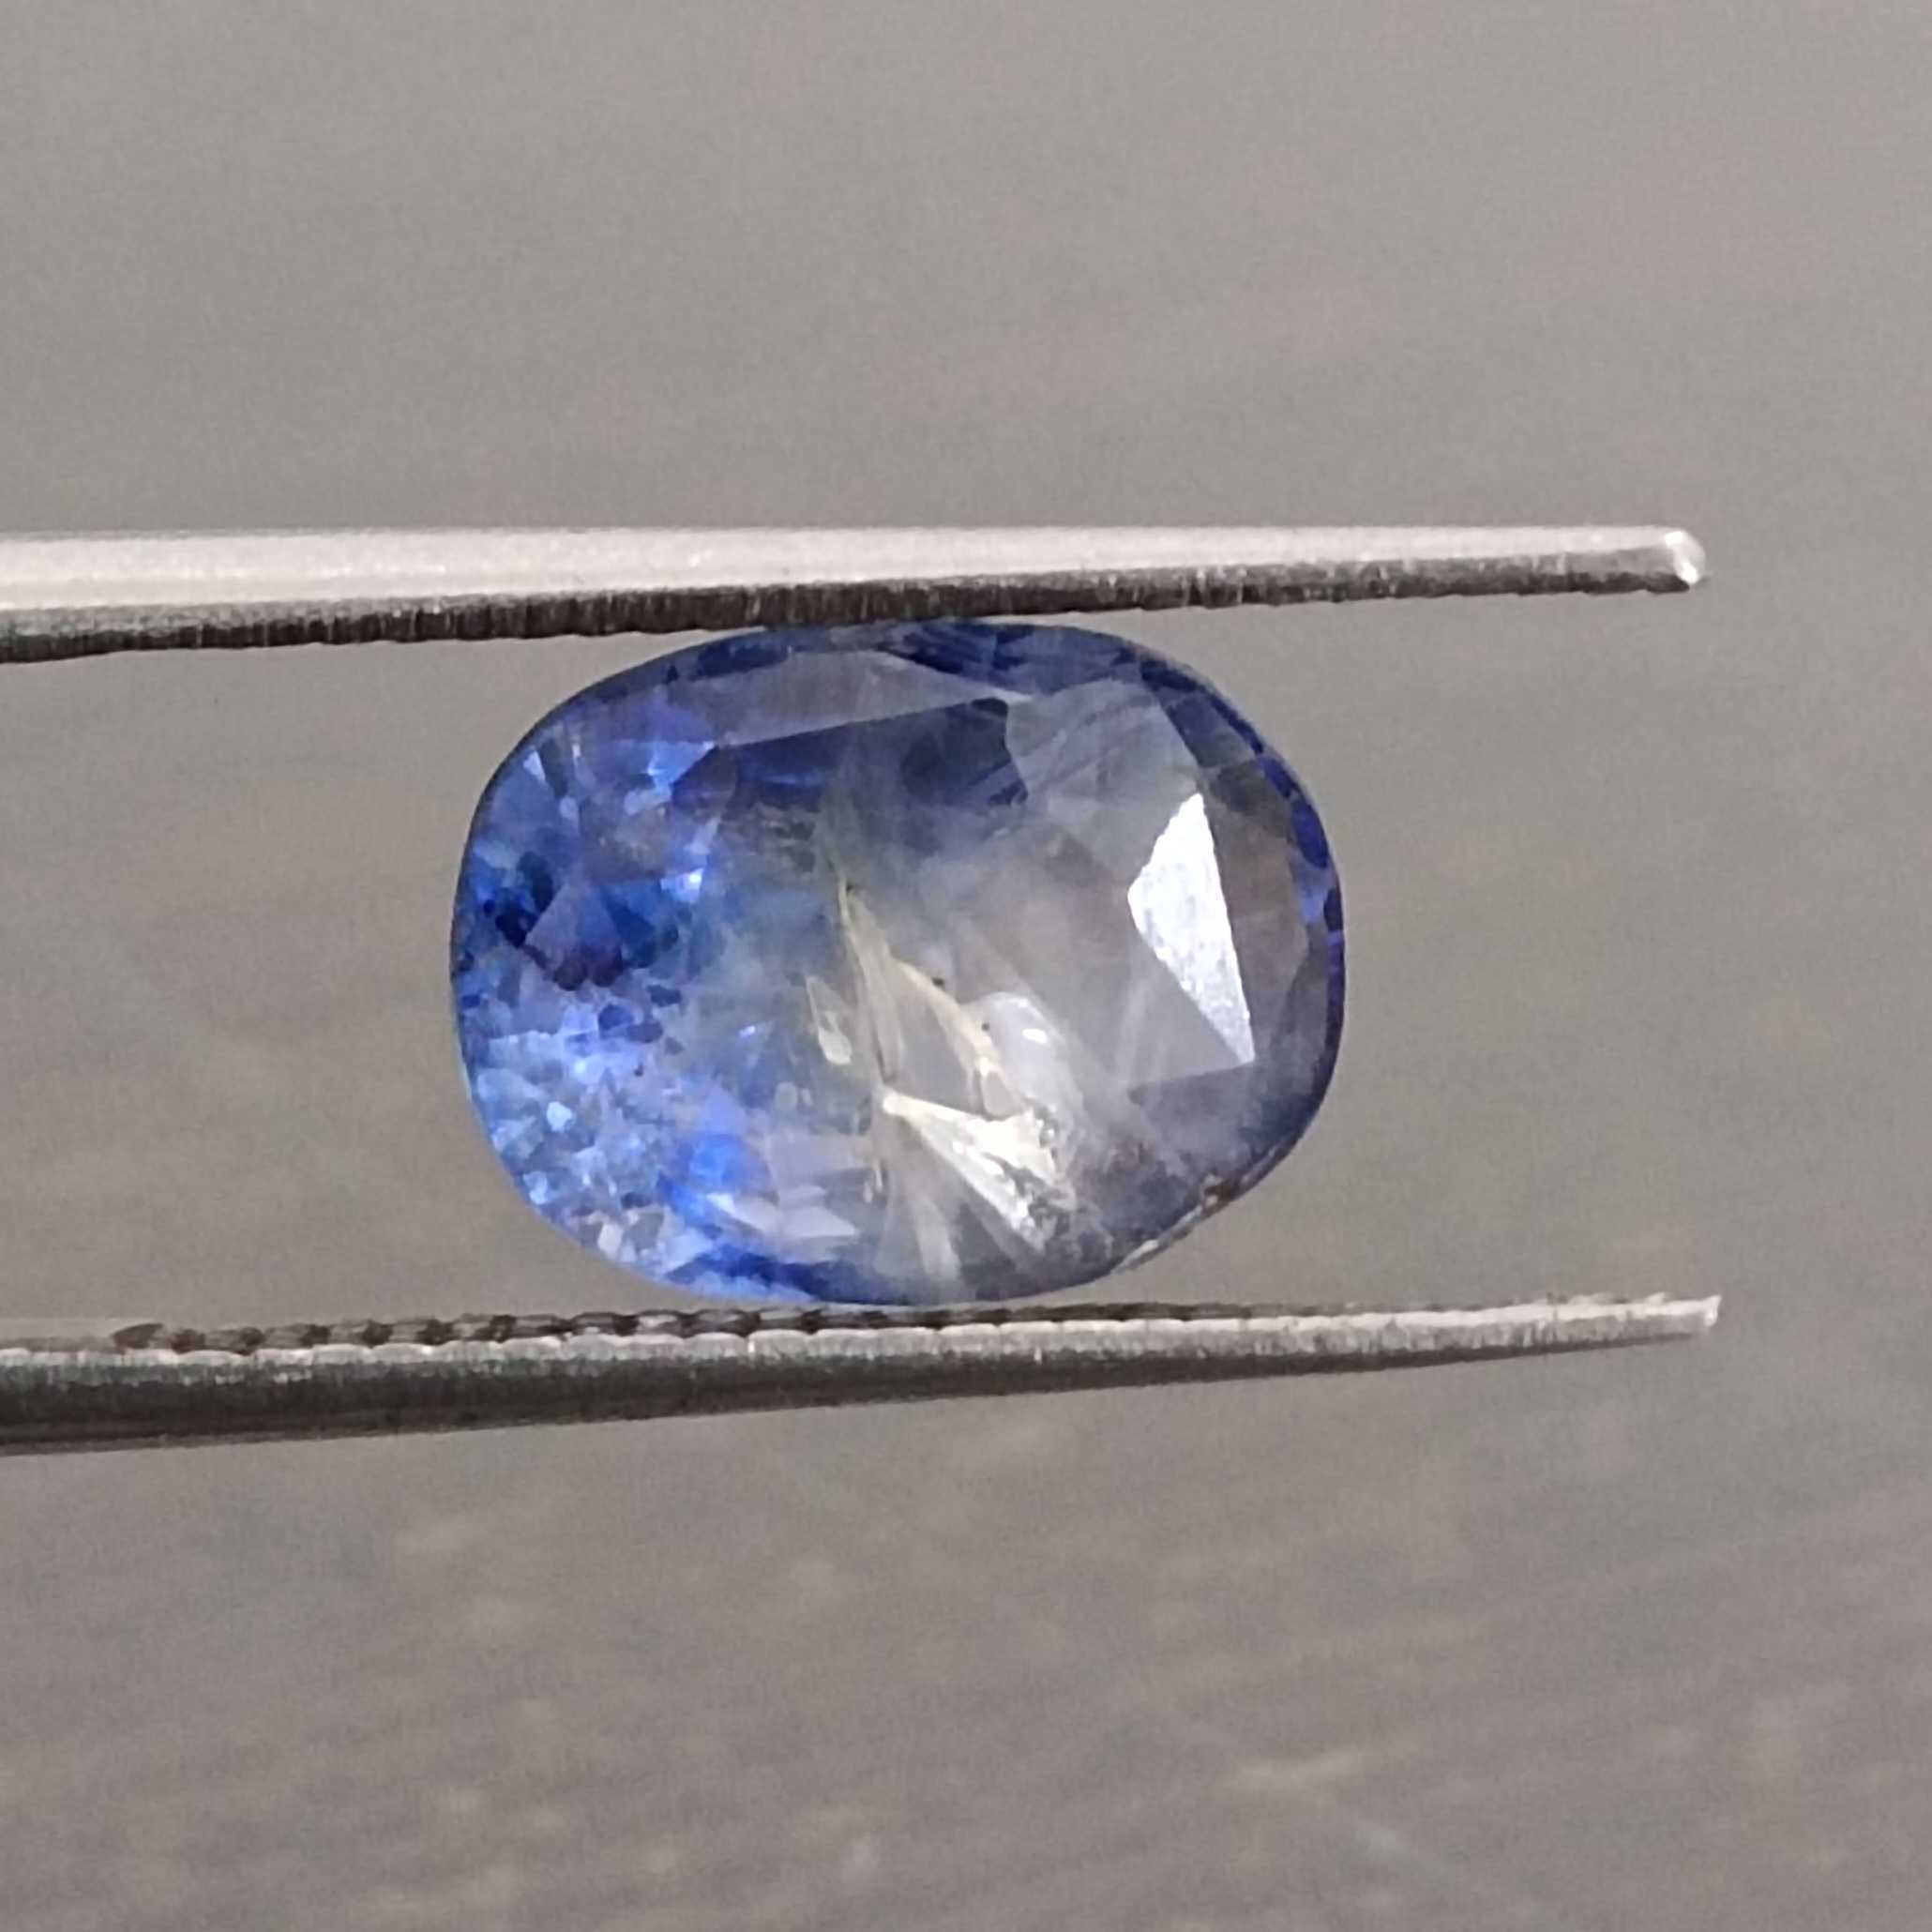 3.37ct IGI certified royal blue oval mix cut sapphire gemstone /